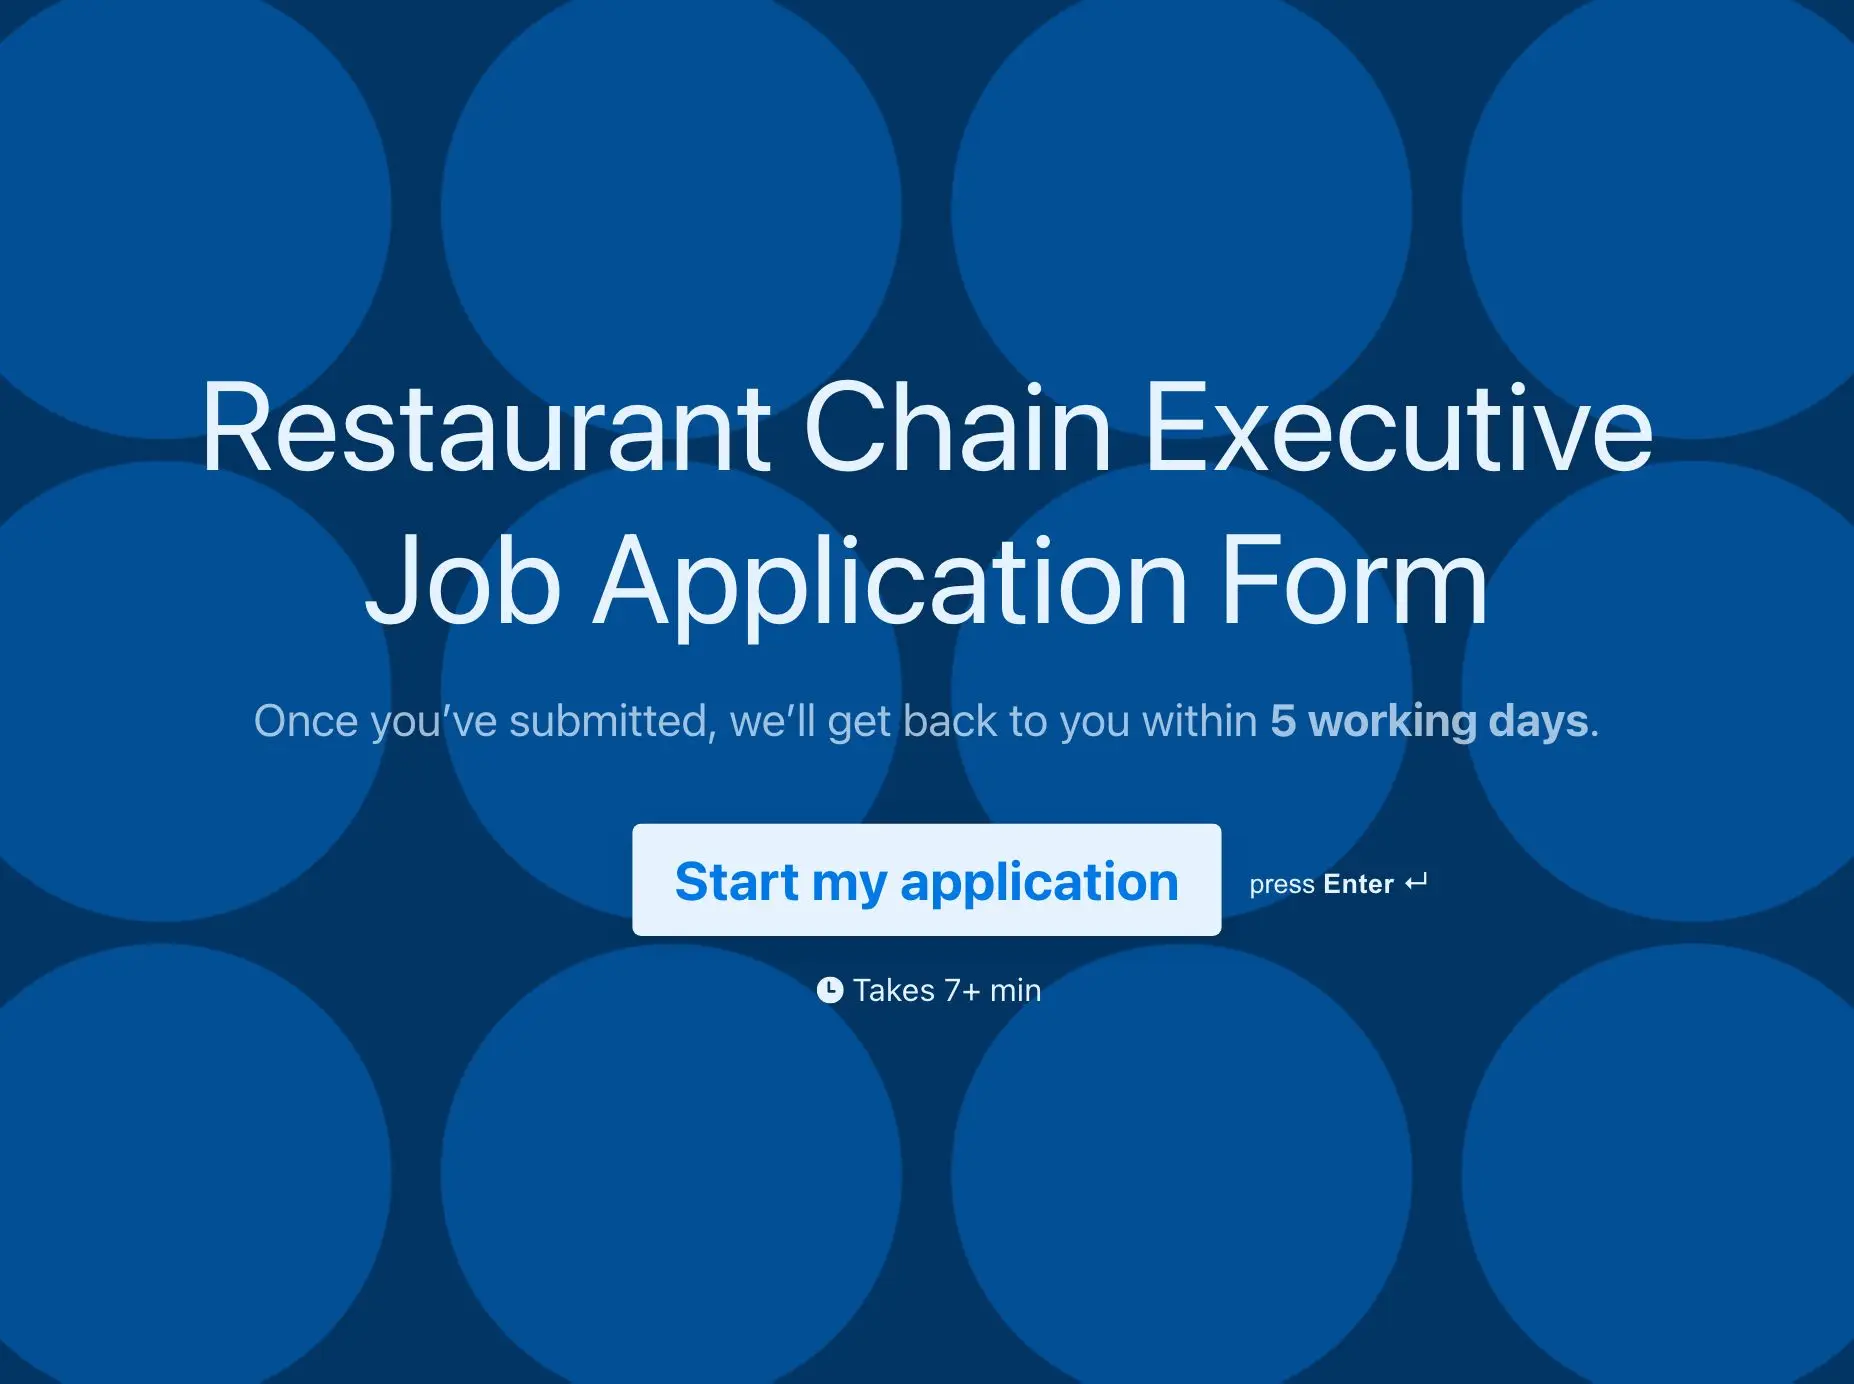 Restaurant Chain Executive Job Application Form Template Hero